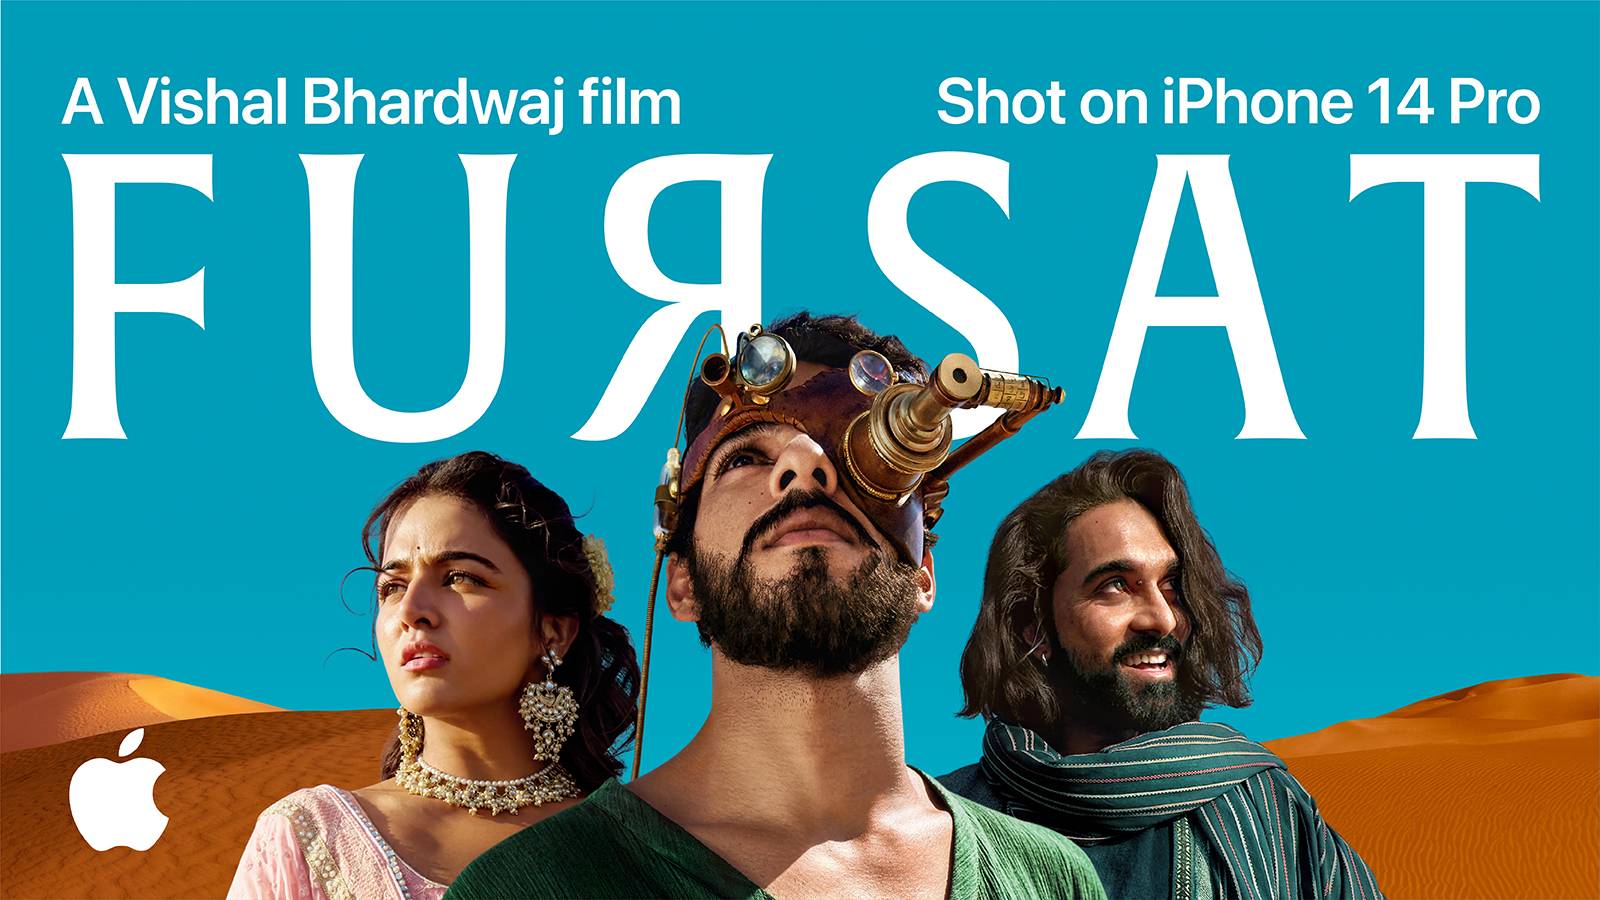 Apple's Bollywood-stye "shot on iPhone" film poster